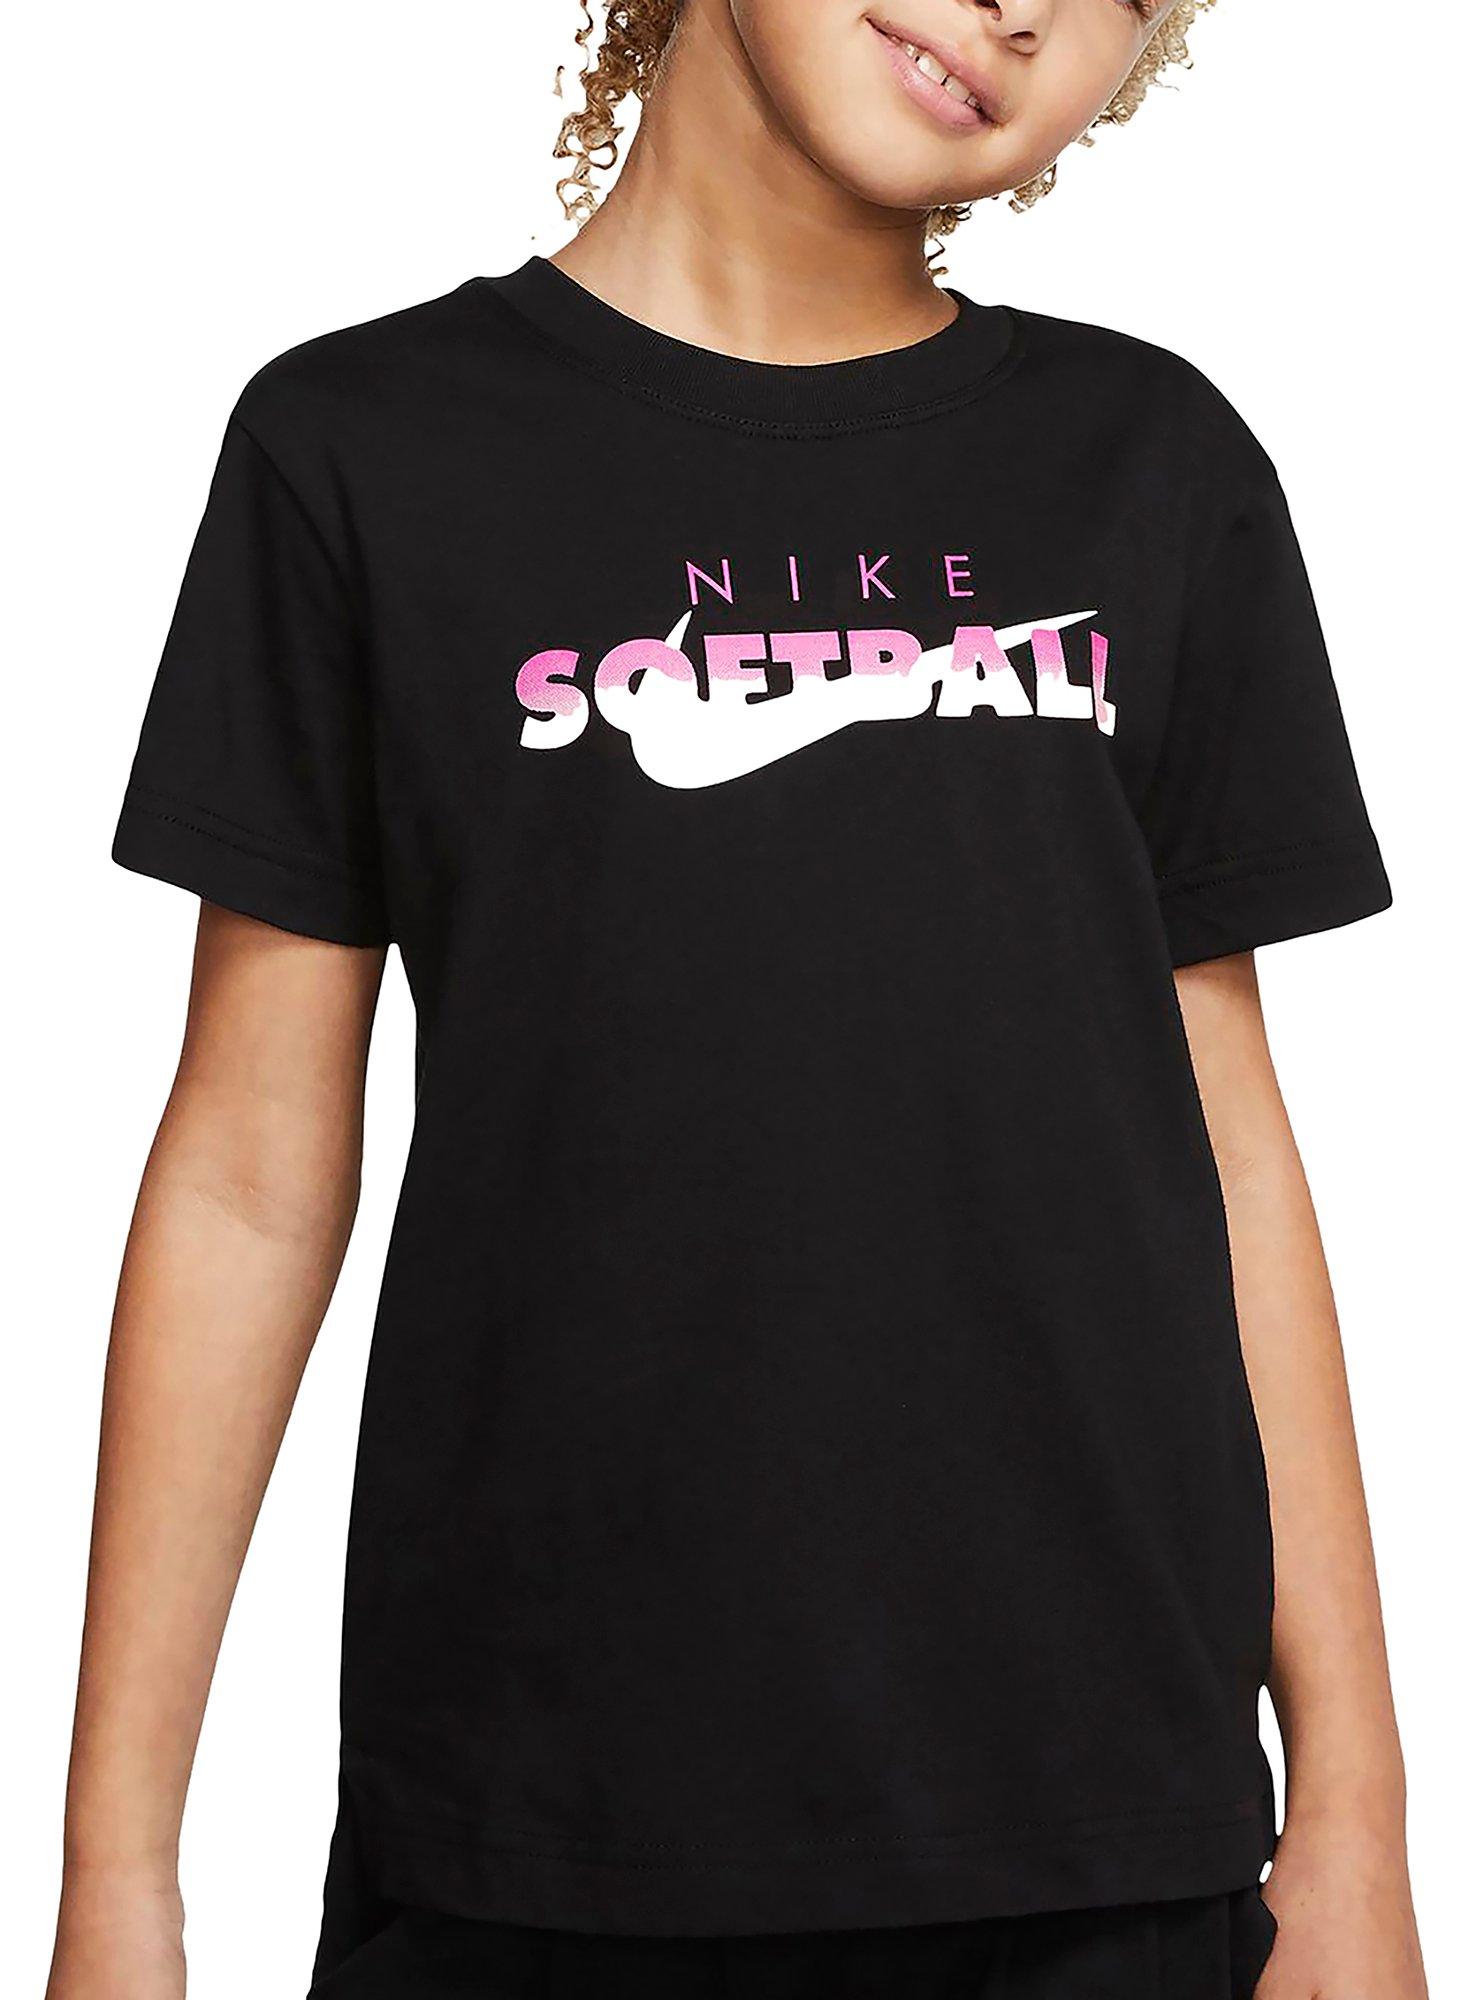 Nike Big Girls Softball T Shirt Bealls Florida